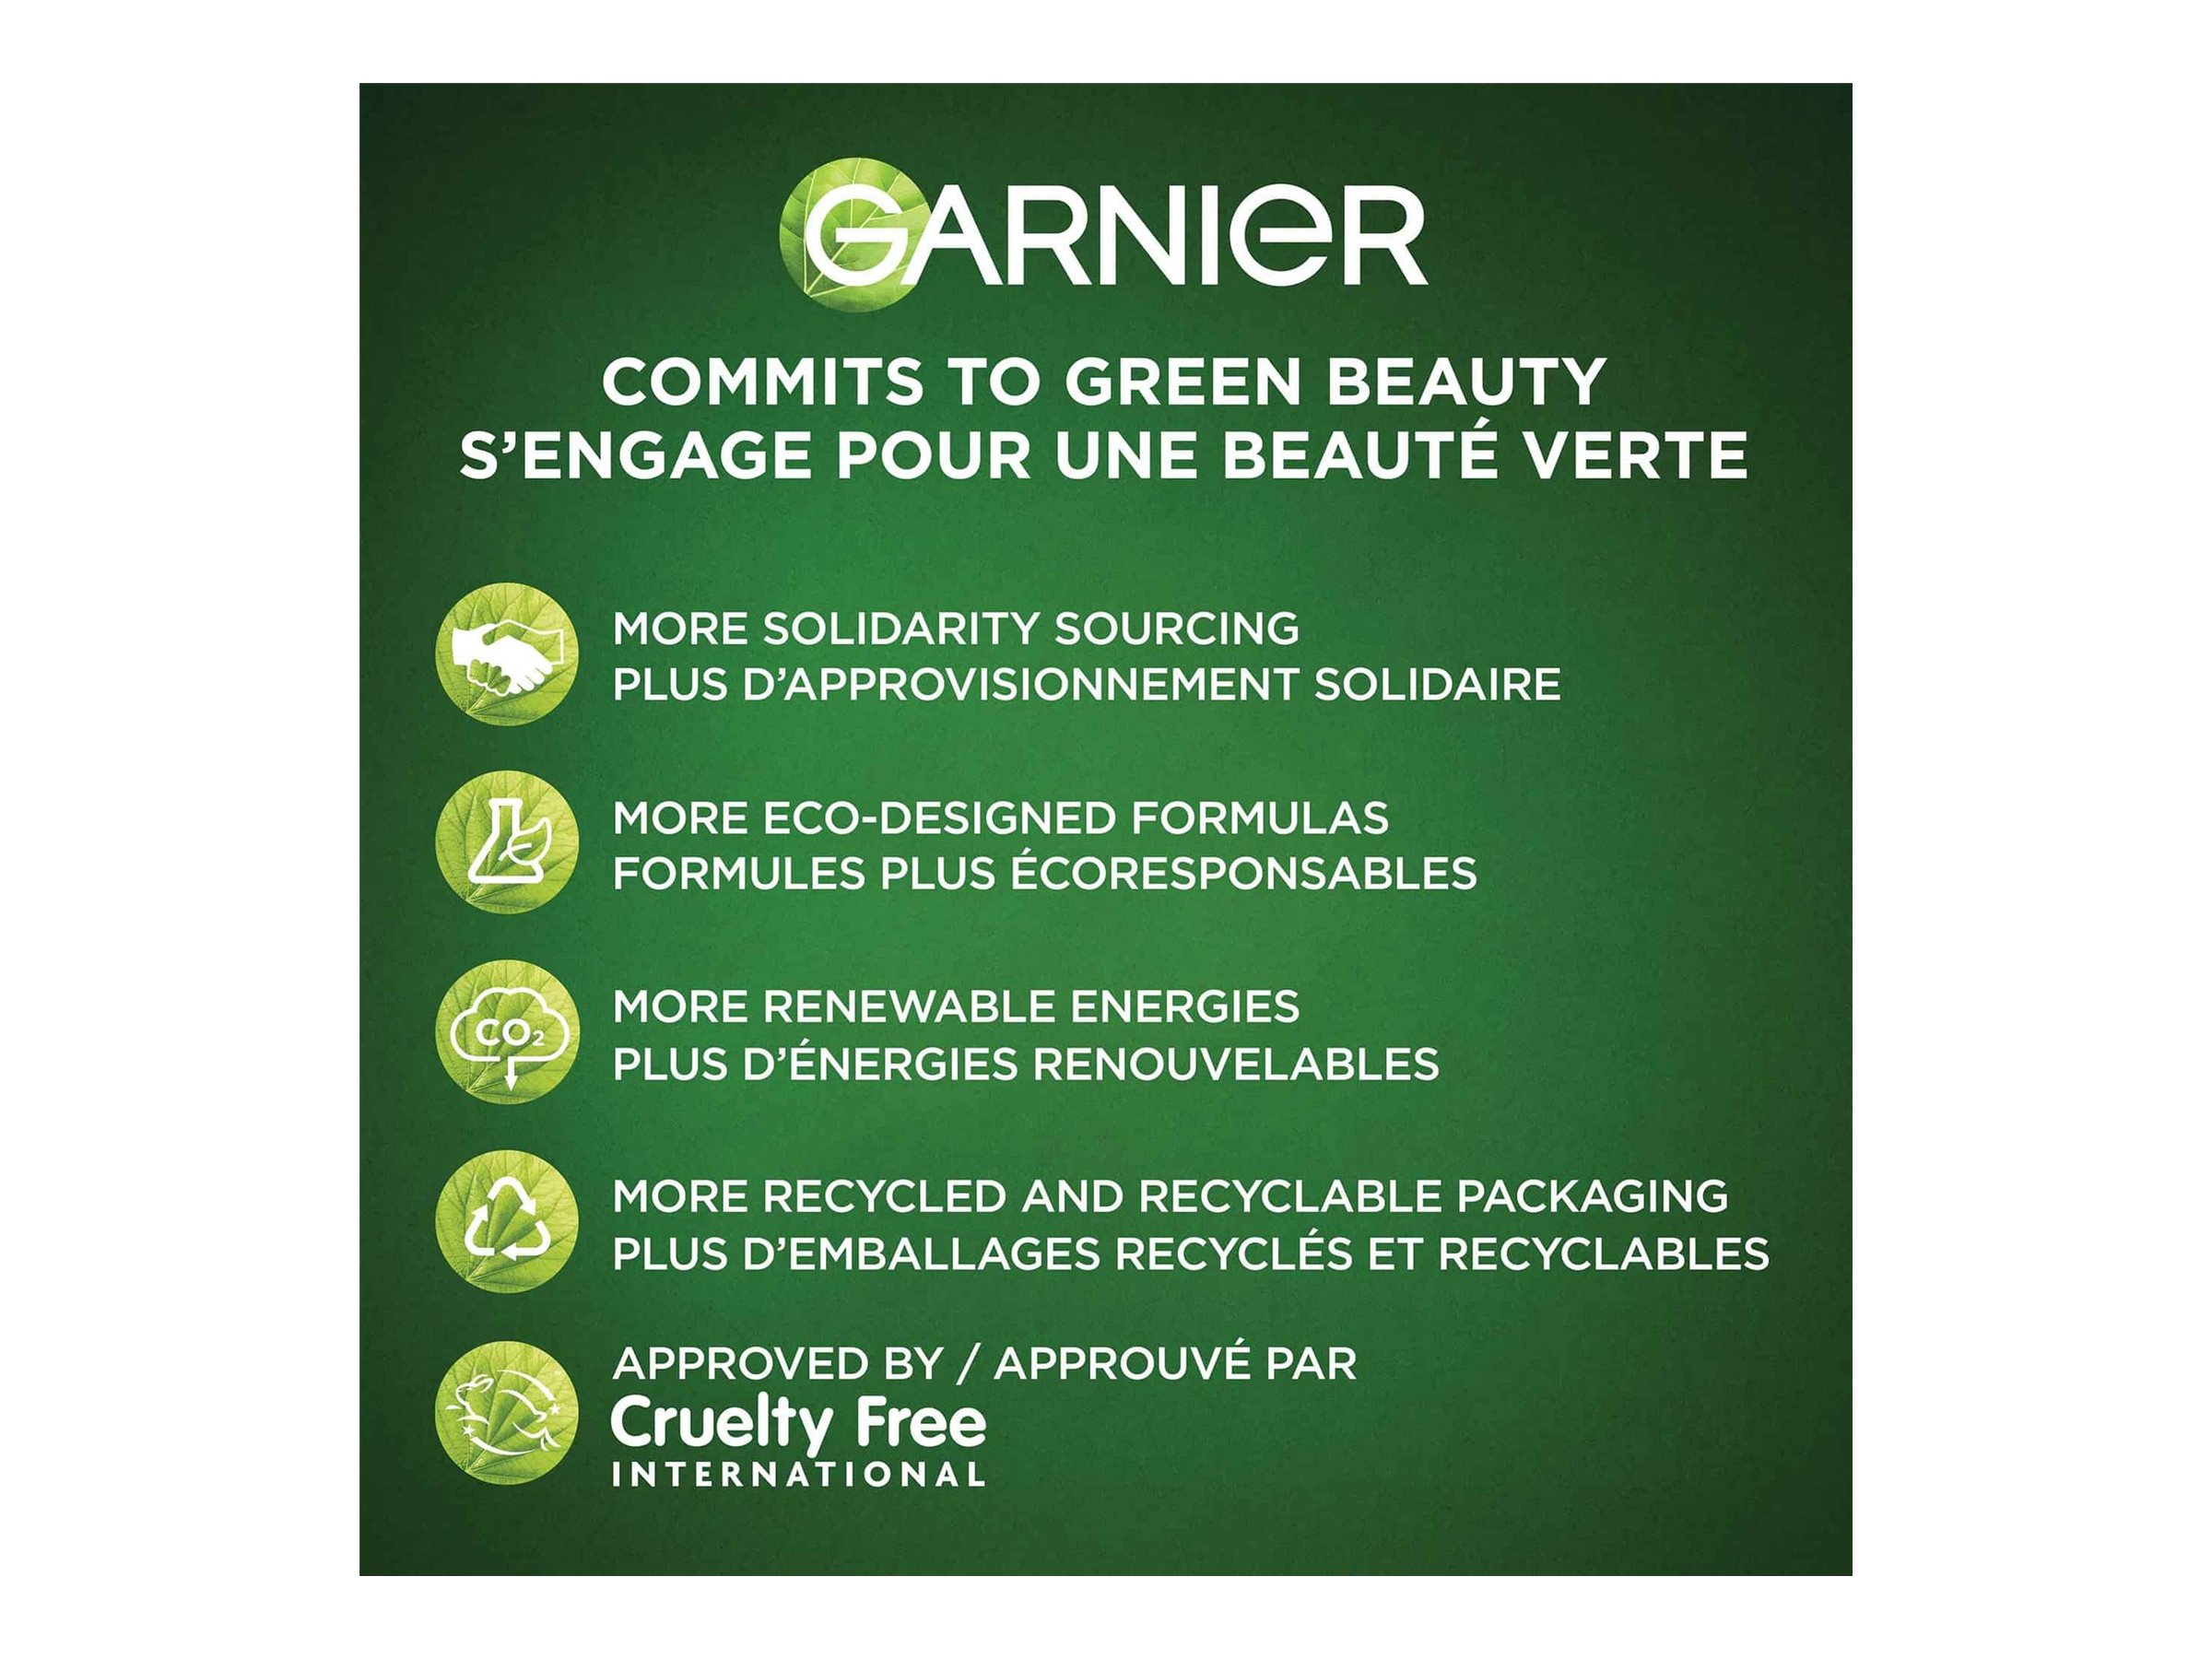 Garnier SkinActive All-in-1 Cleansing Micellar Water - 700ml